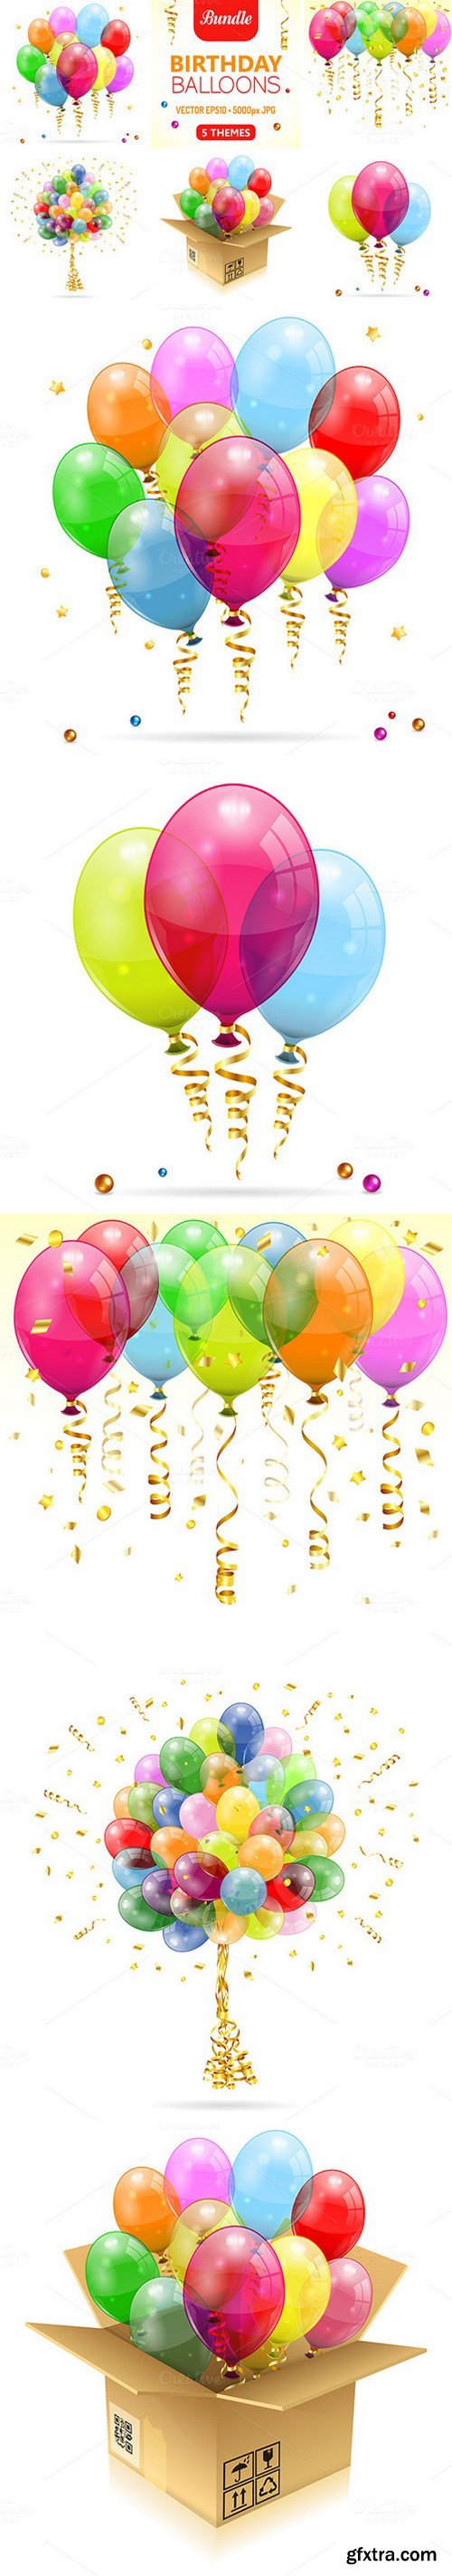 CM - Birthday Balloons 412172